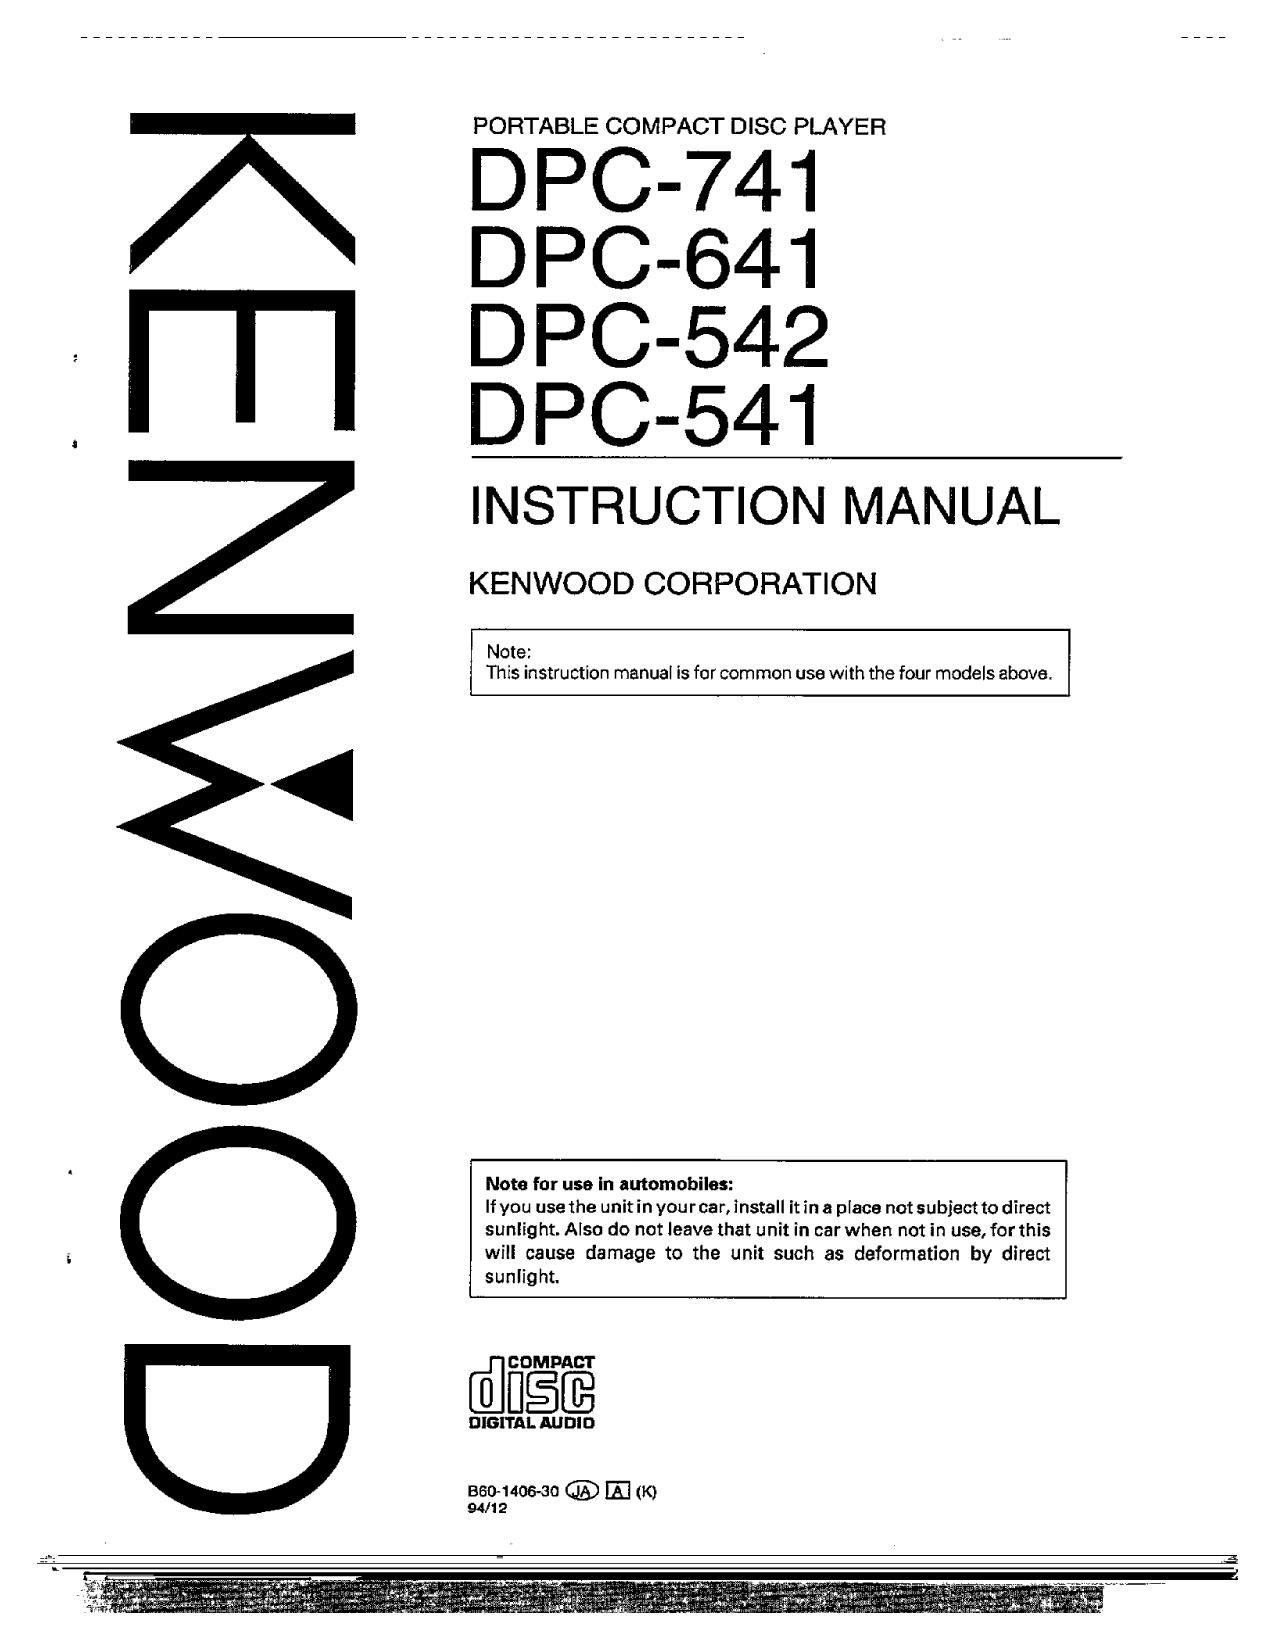 Kenwood DPC 542 Owners Manual